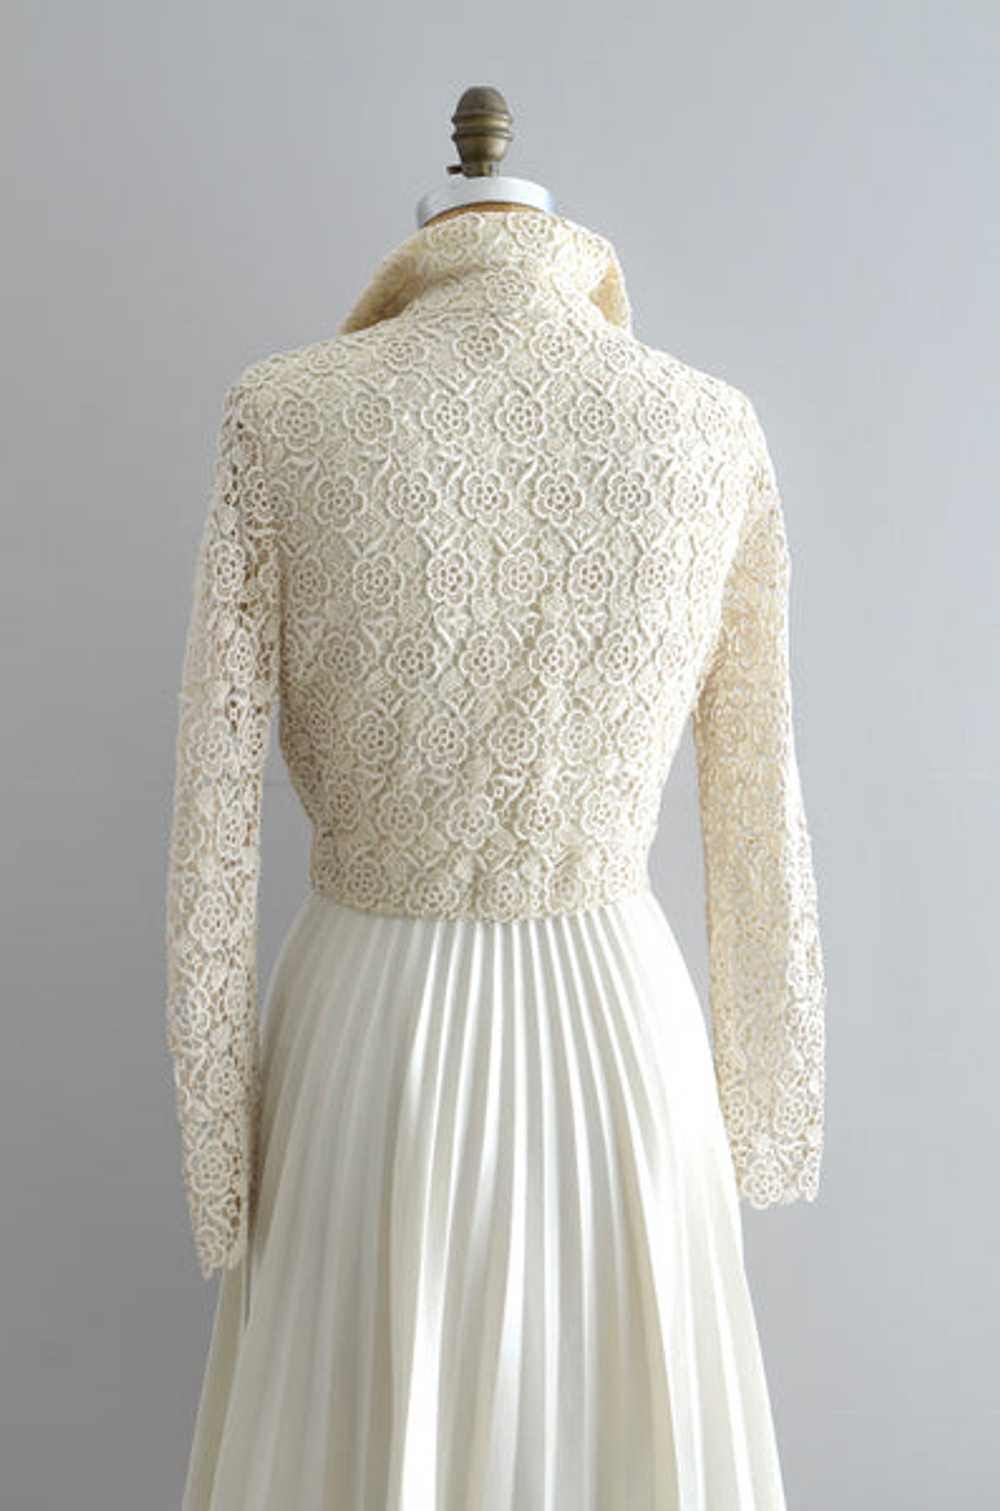 1970s Lace Dress - image 7